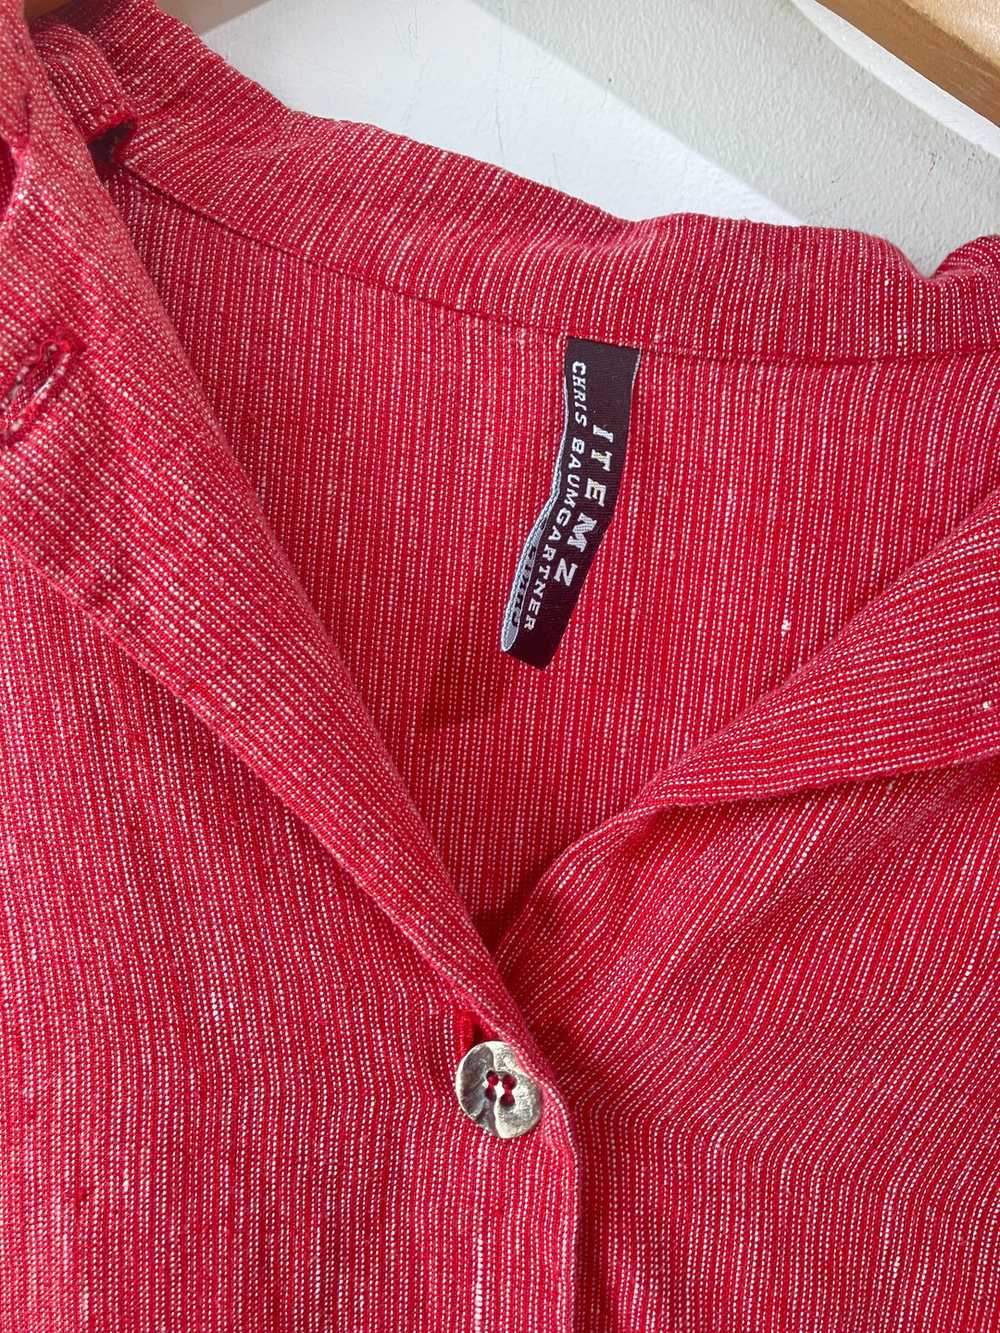 Itemz Chris Baumgartner Red Linen Jacket - image 4